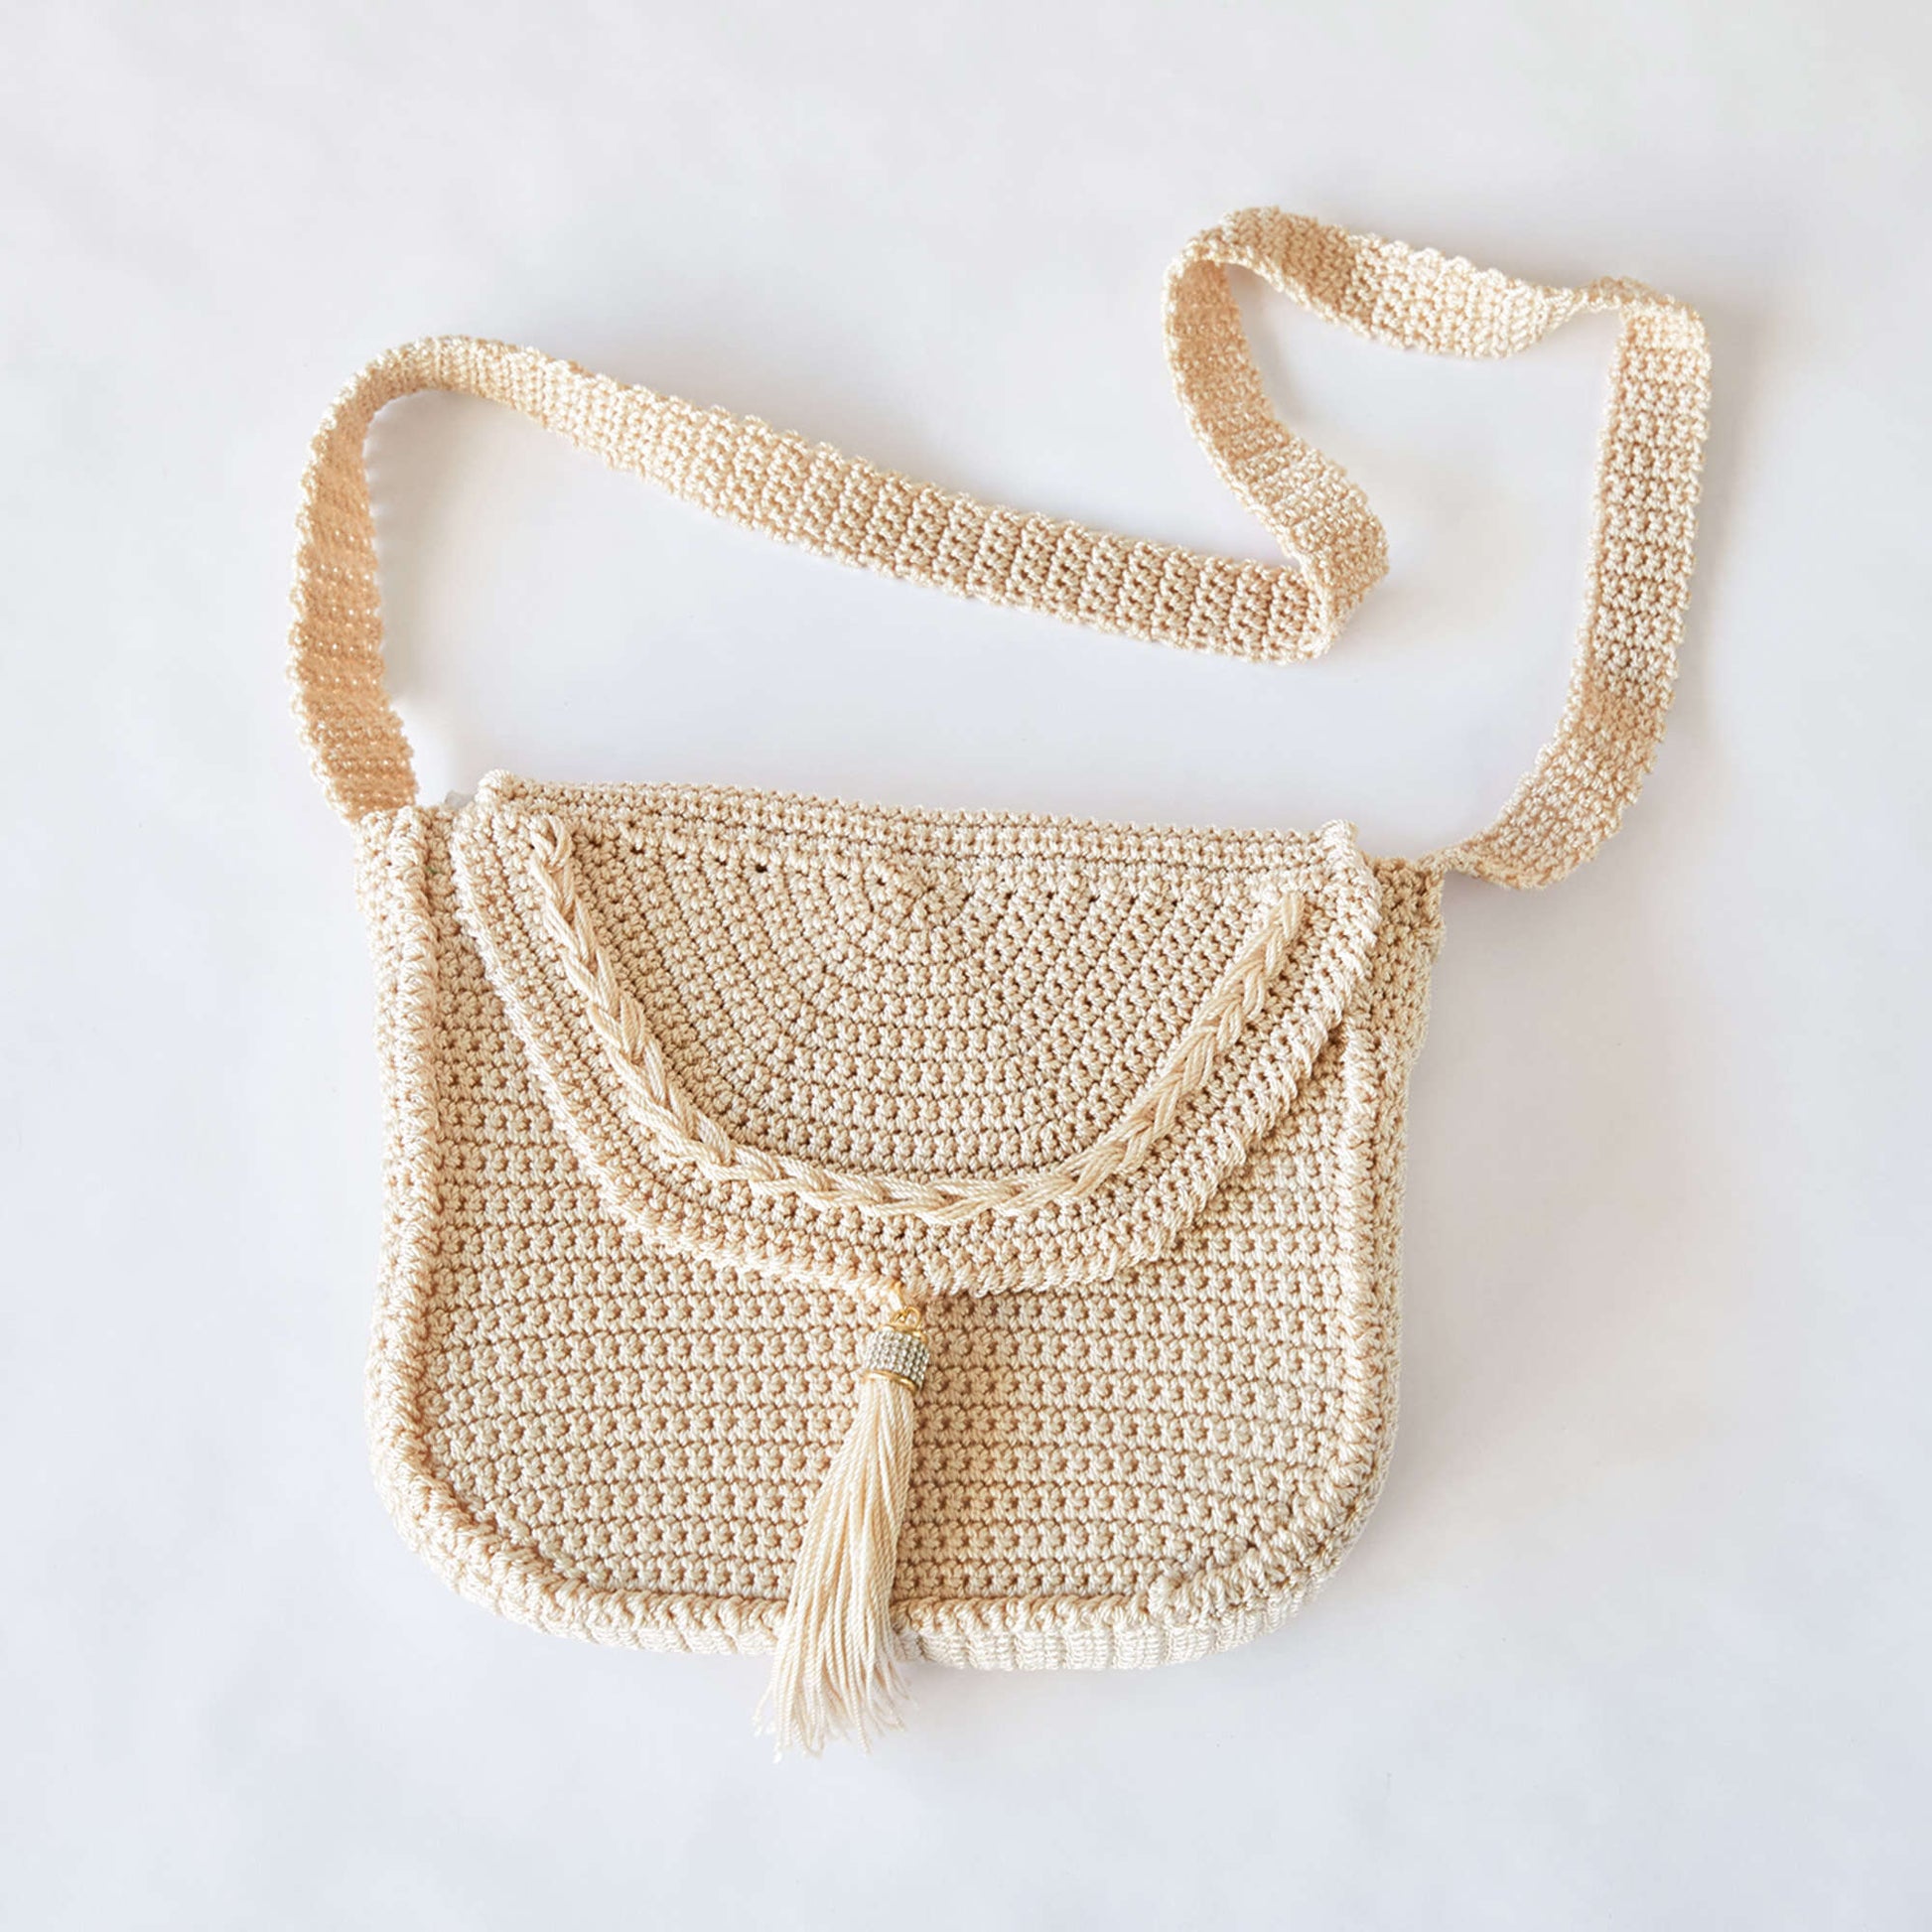 Heart Crossbody Crochet Bag Pattern - Step-By-Step Tutorial